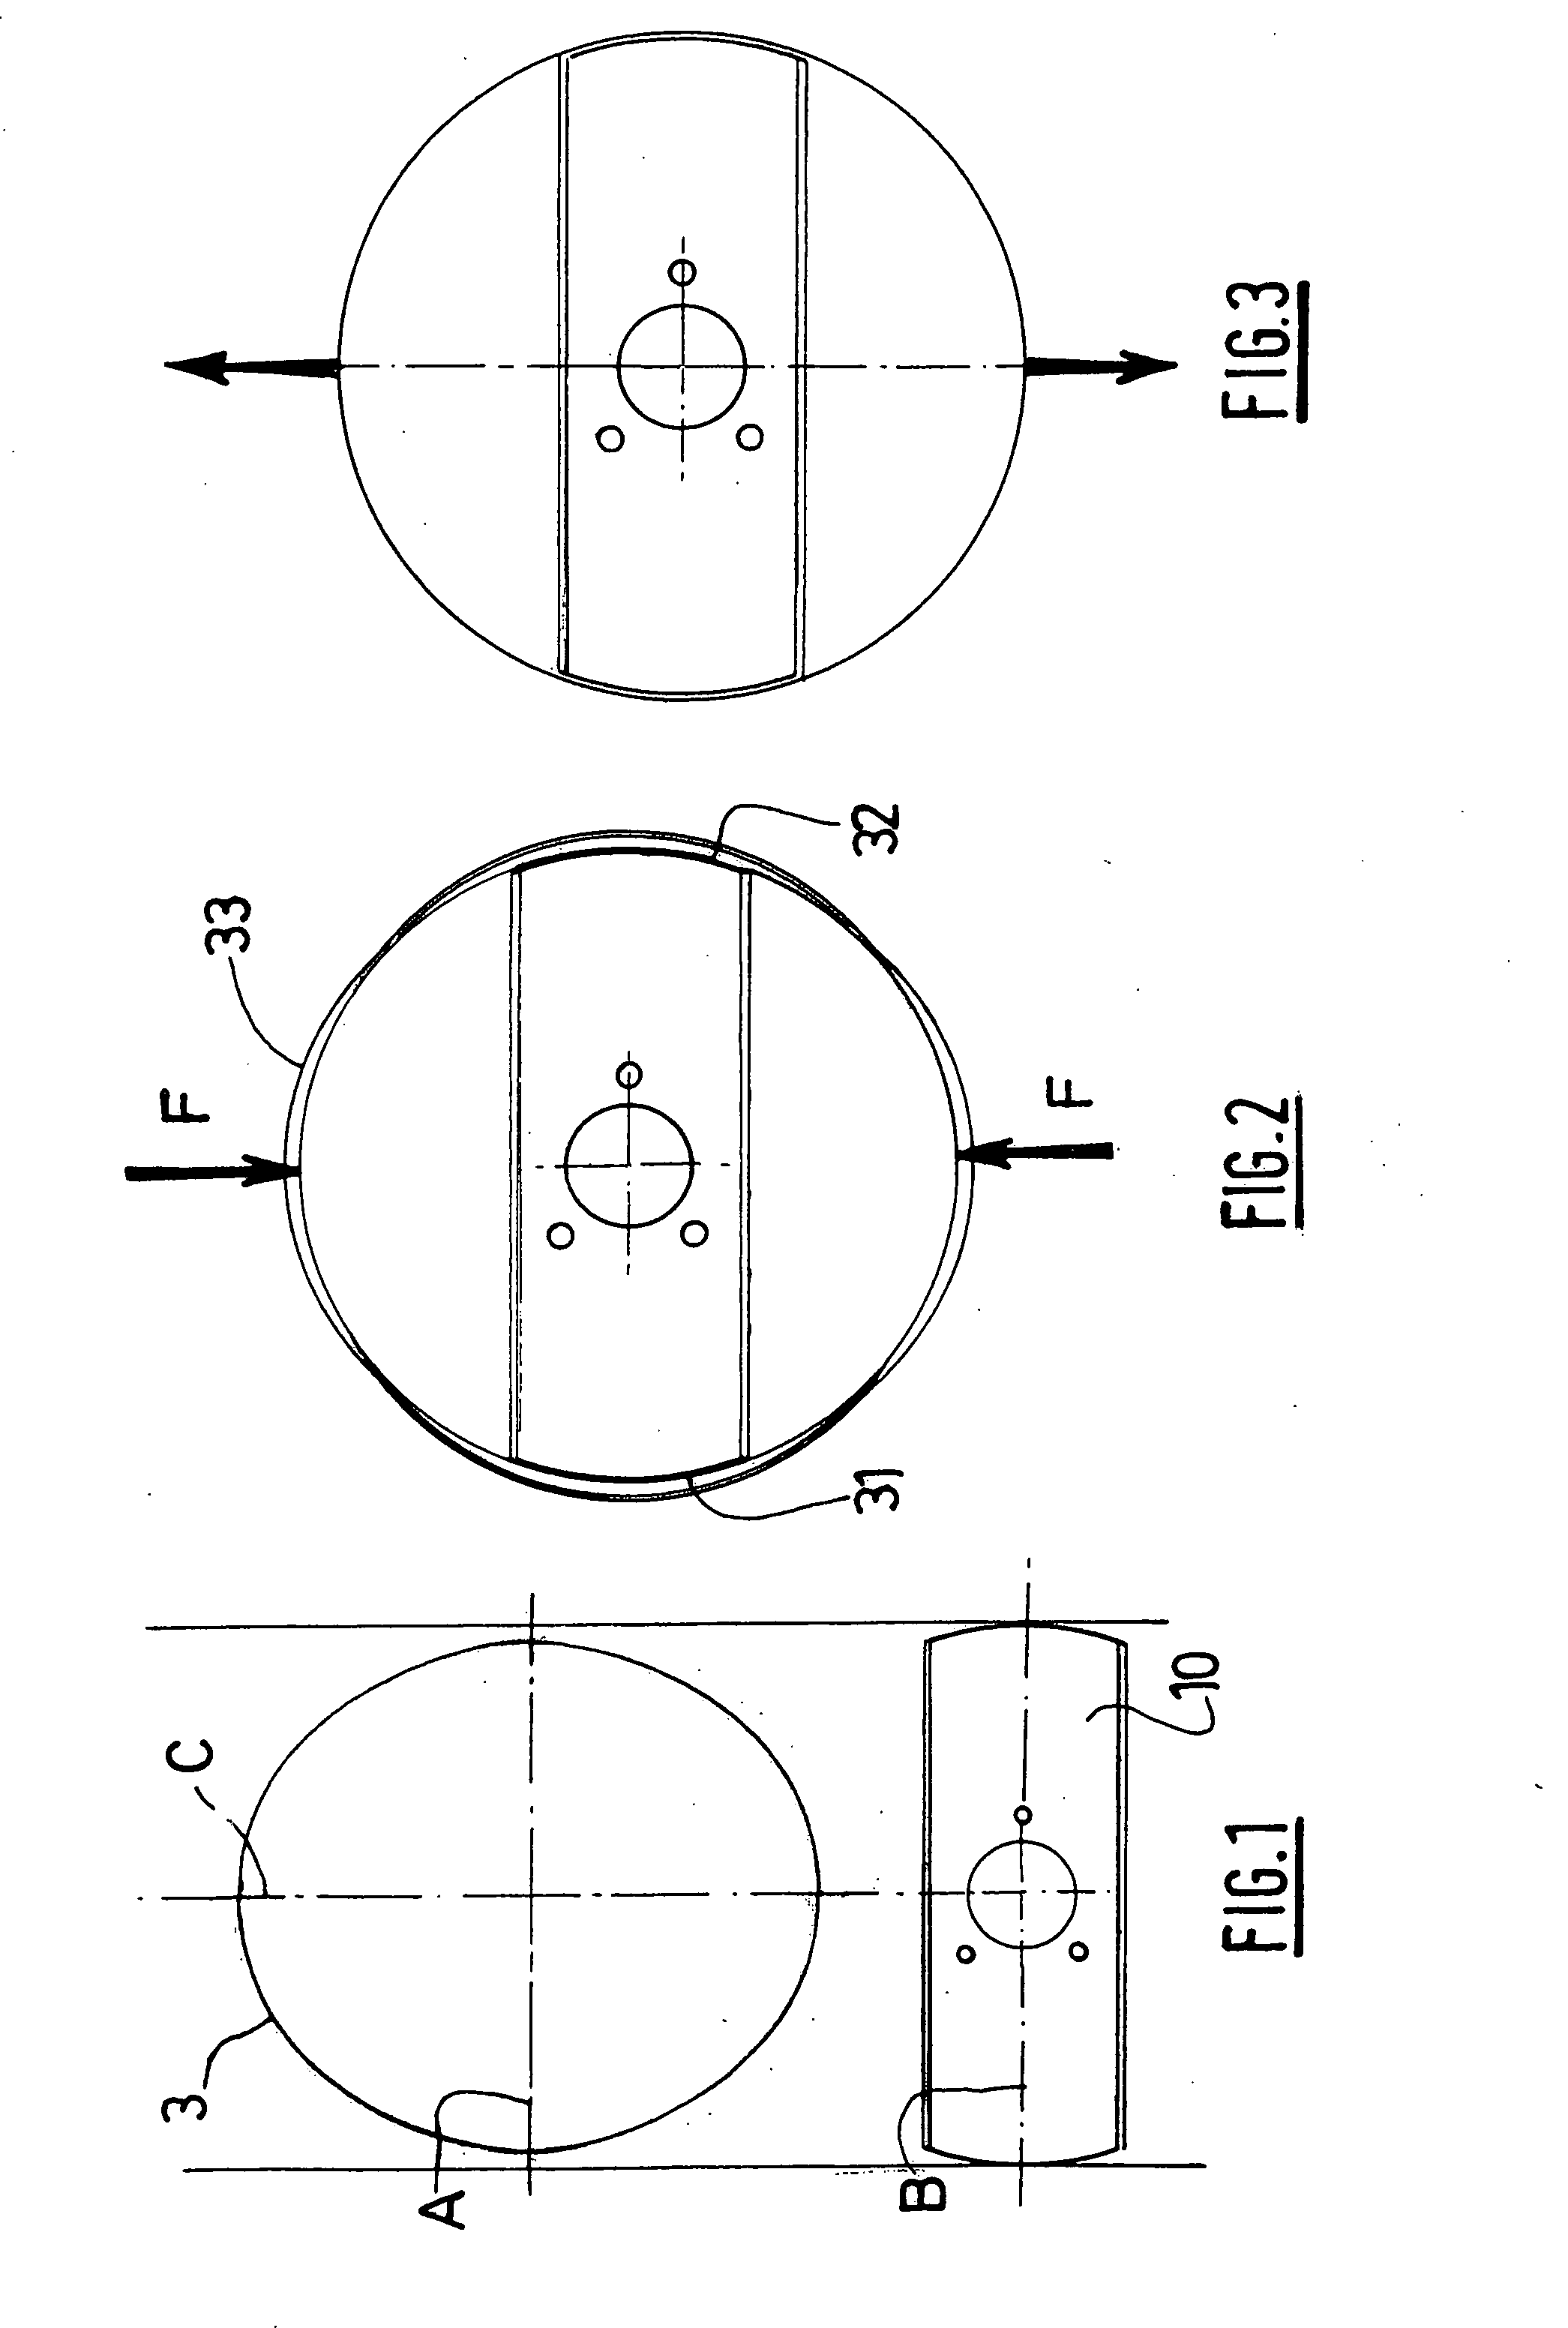 Method of assembling a refrigerating compressor